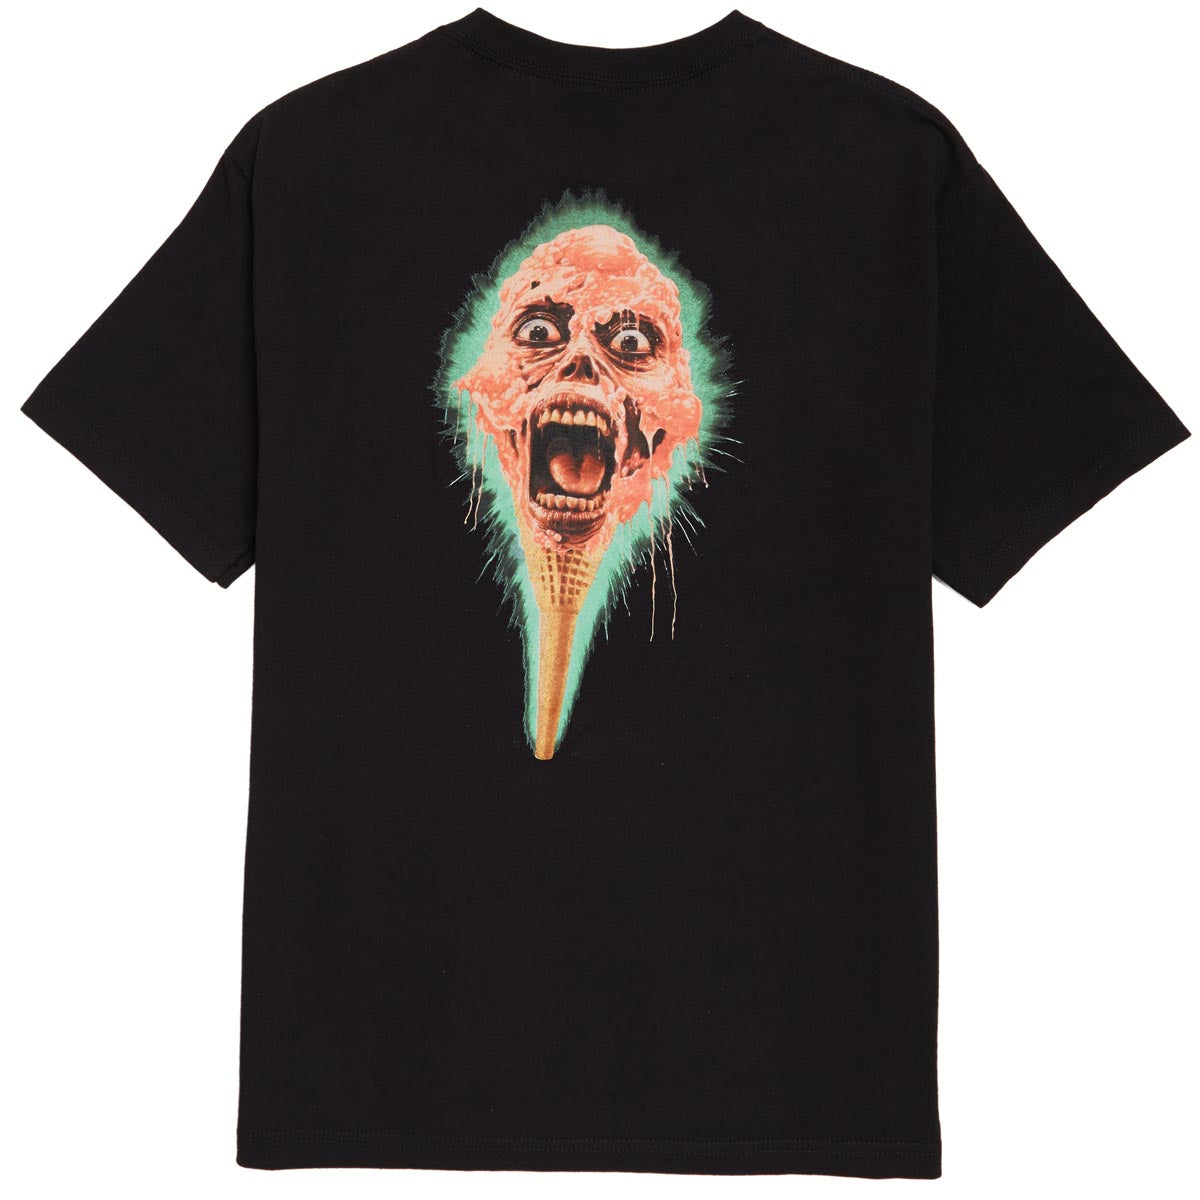 Deathwish Skull T-Shirt - Black image 1